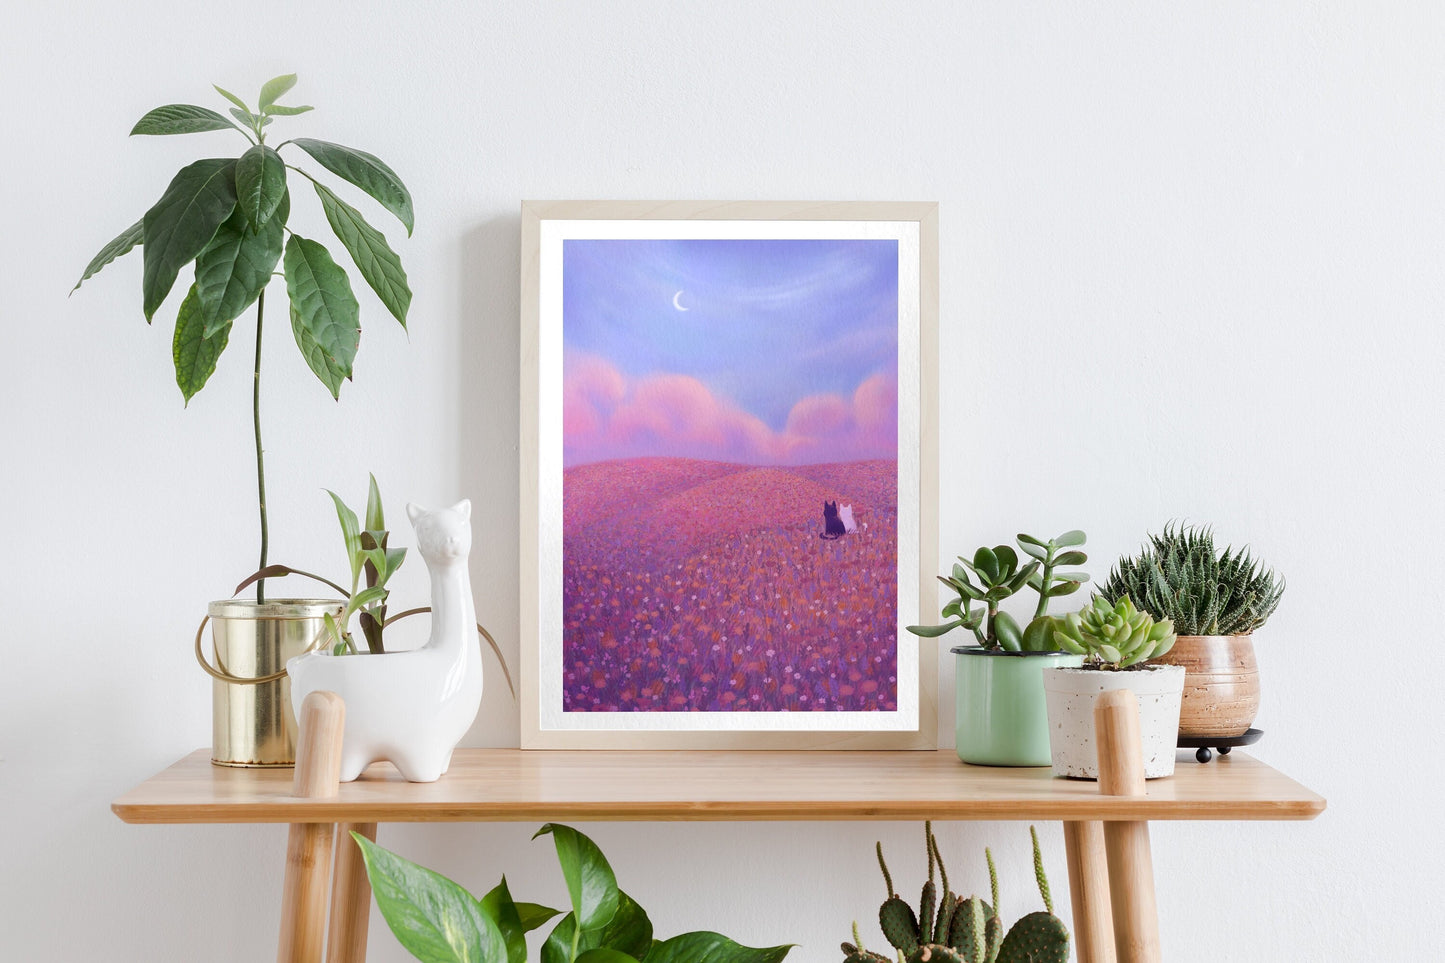 Small Cute Cat Art Print | Flowers & Nature Landscape Poster | Pastel Pink and Purple Scenery Wall Decor | Original Artwork by Mona Mauve